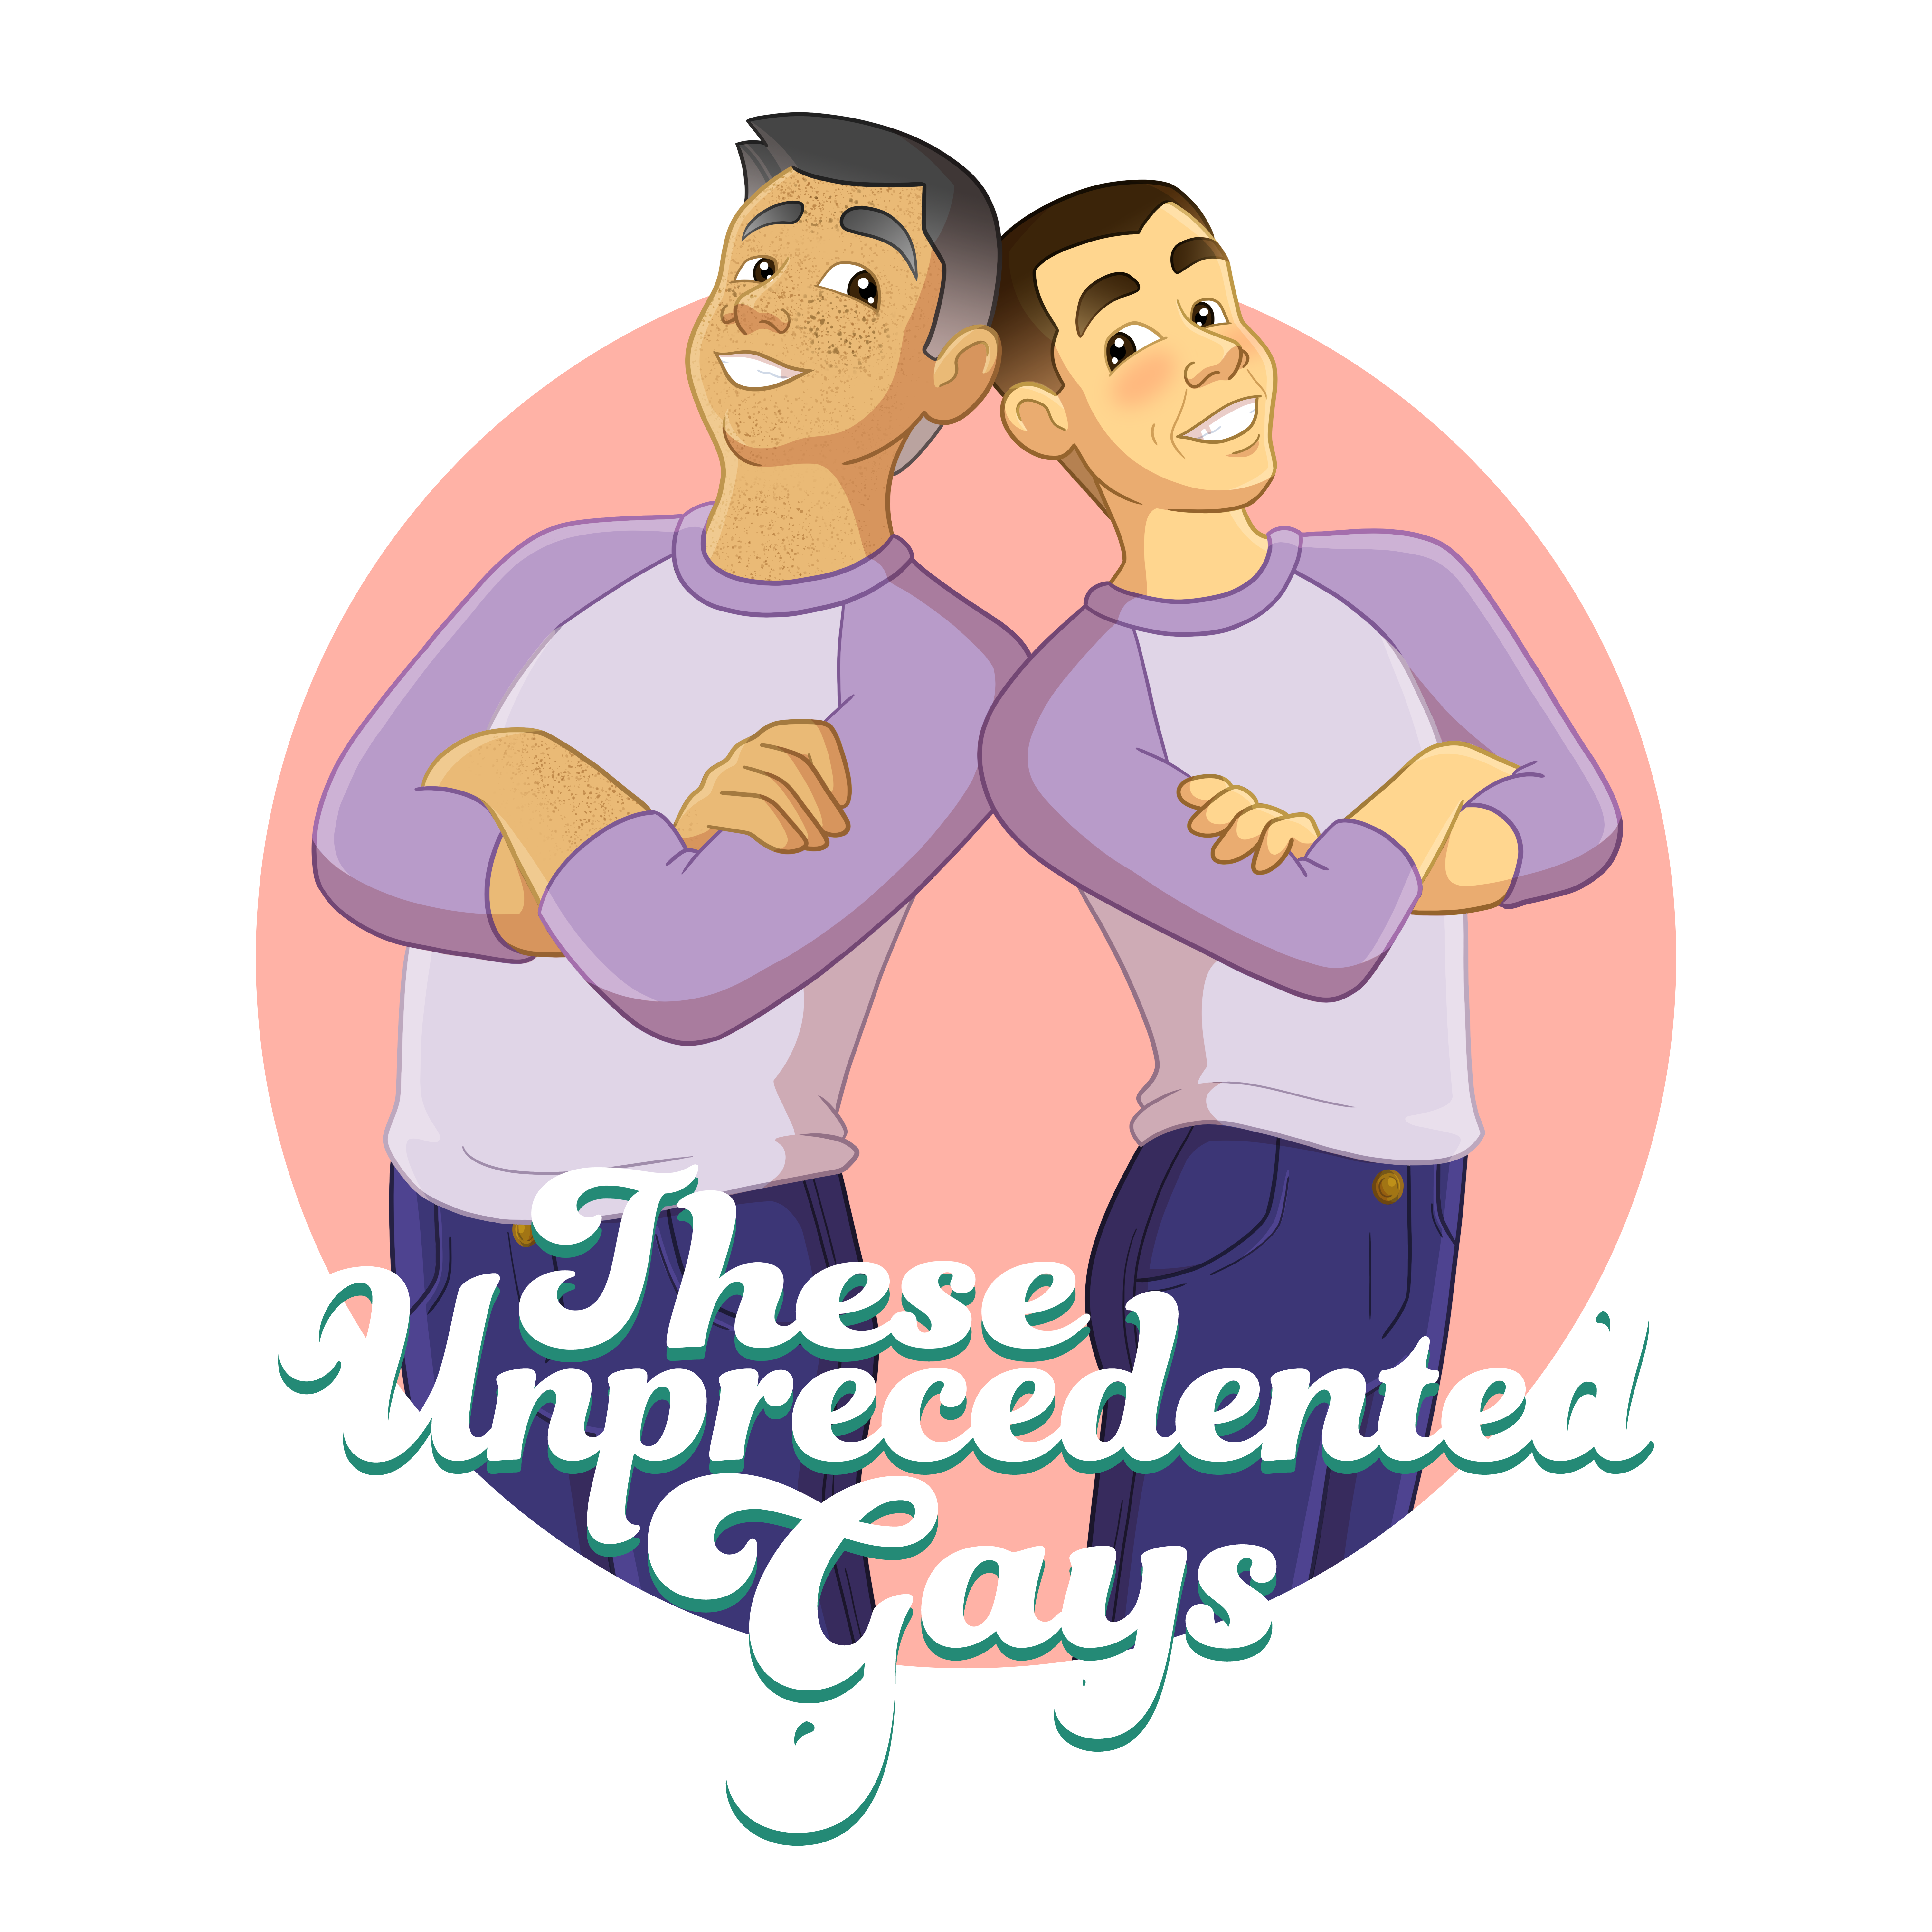 These Unprecedented Gays